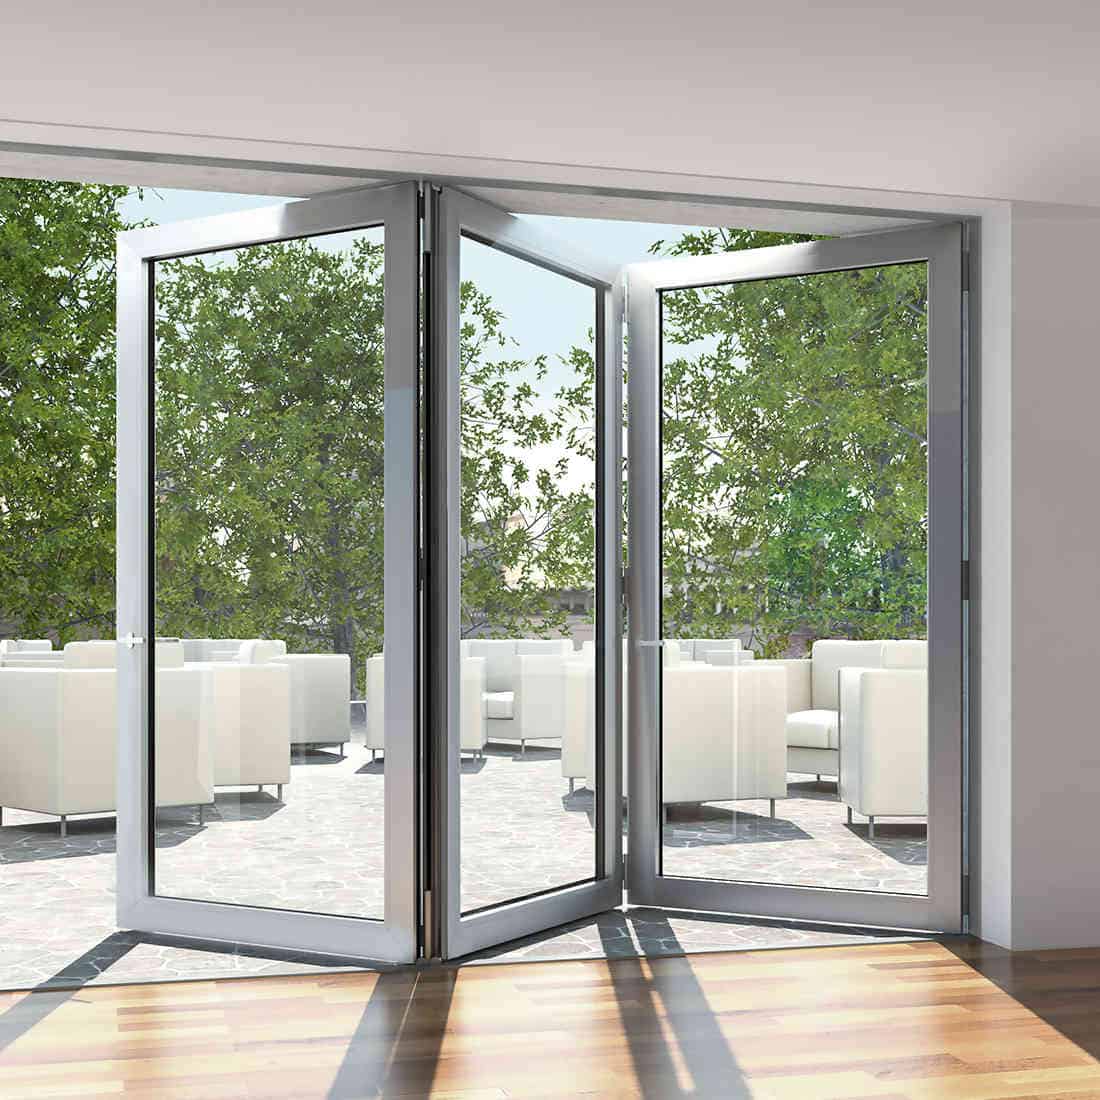 Keywords: Sliding glass door, Aluminium Doors
Modified Description: An aluminium sliding door in a living room.